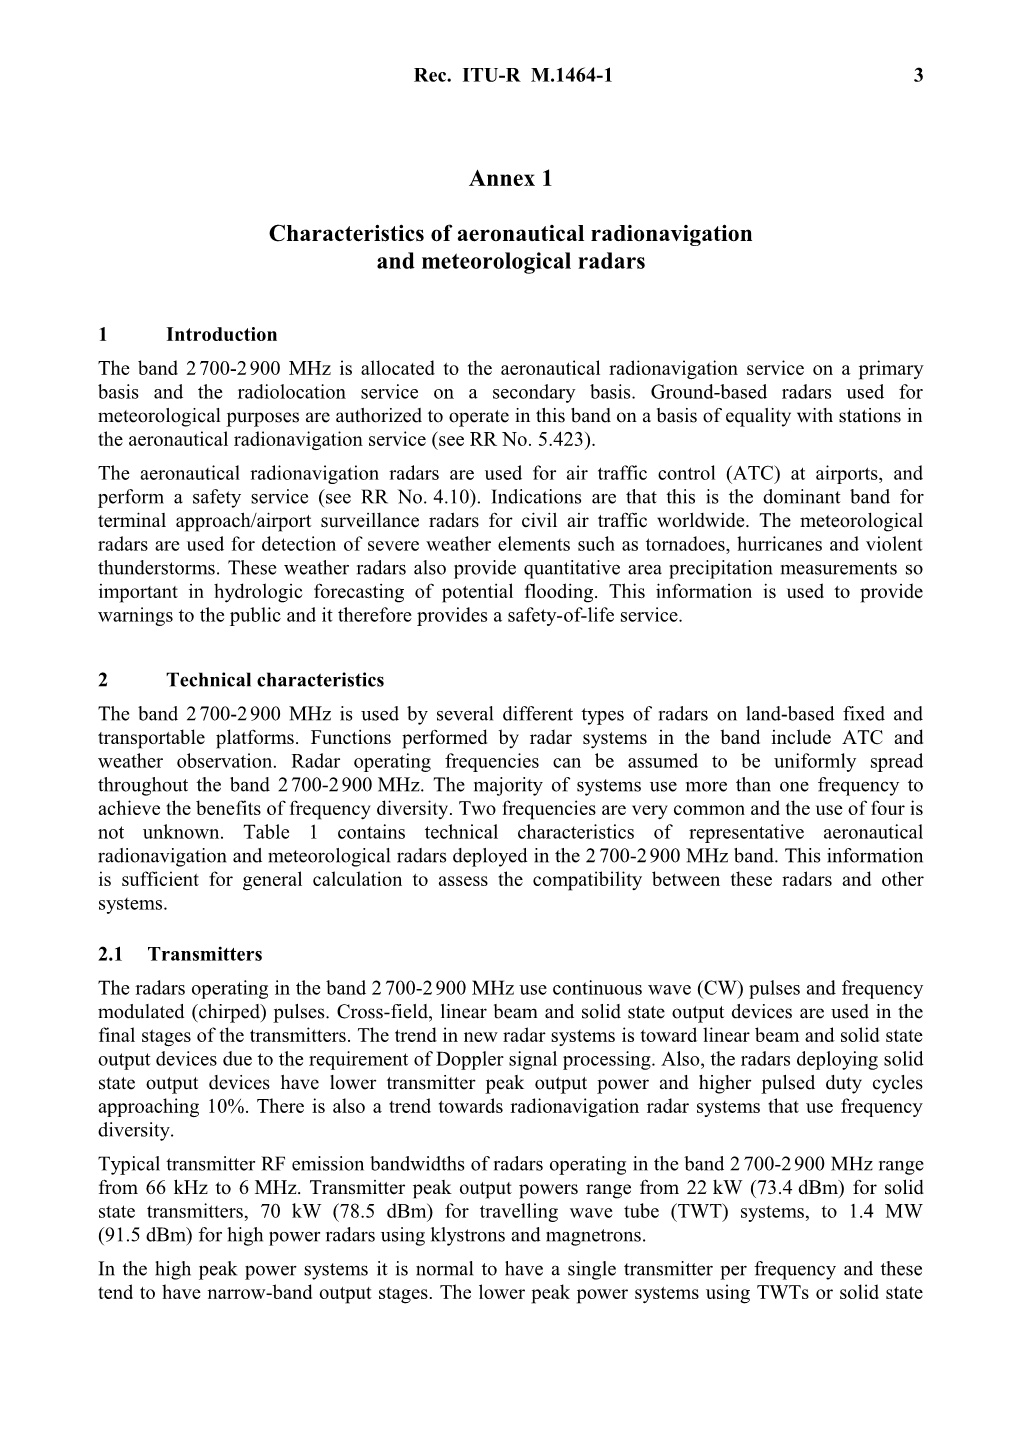 RECOMMENDATION ITU-R M.1464-1* - Characteristics of Radiolocation Radars, and Characteristics